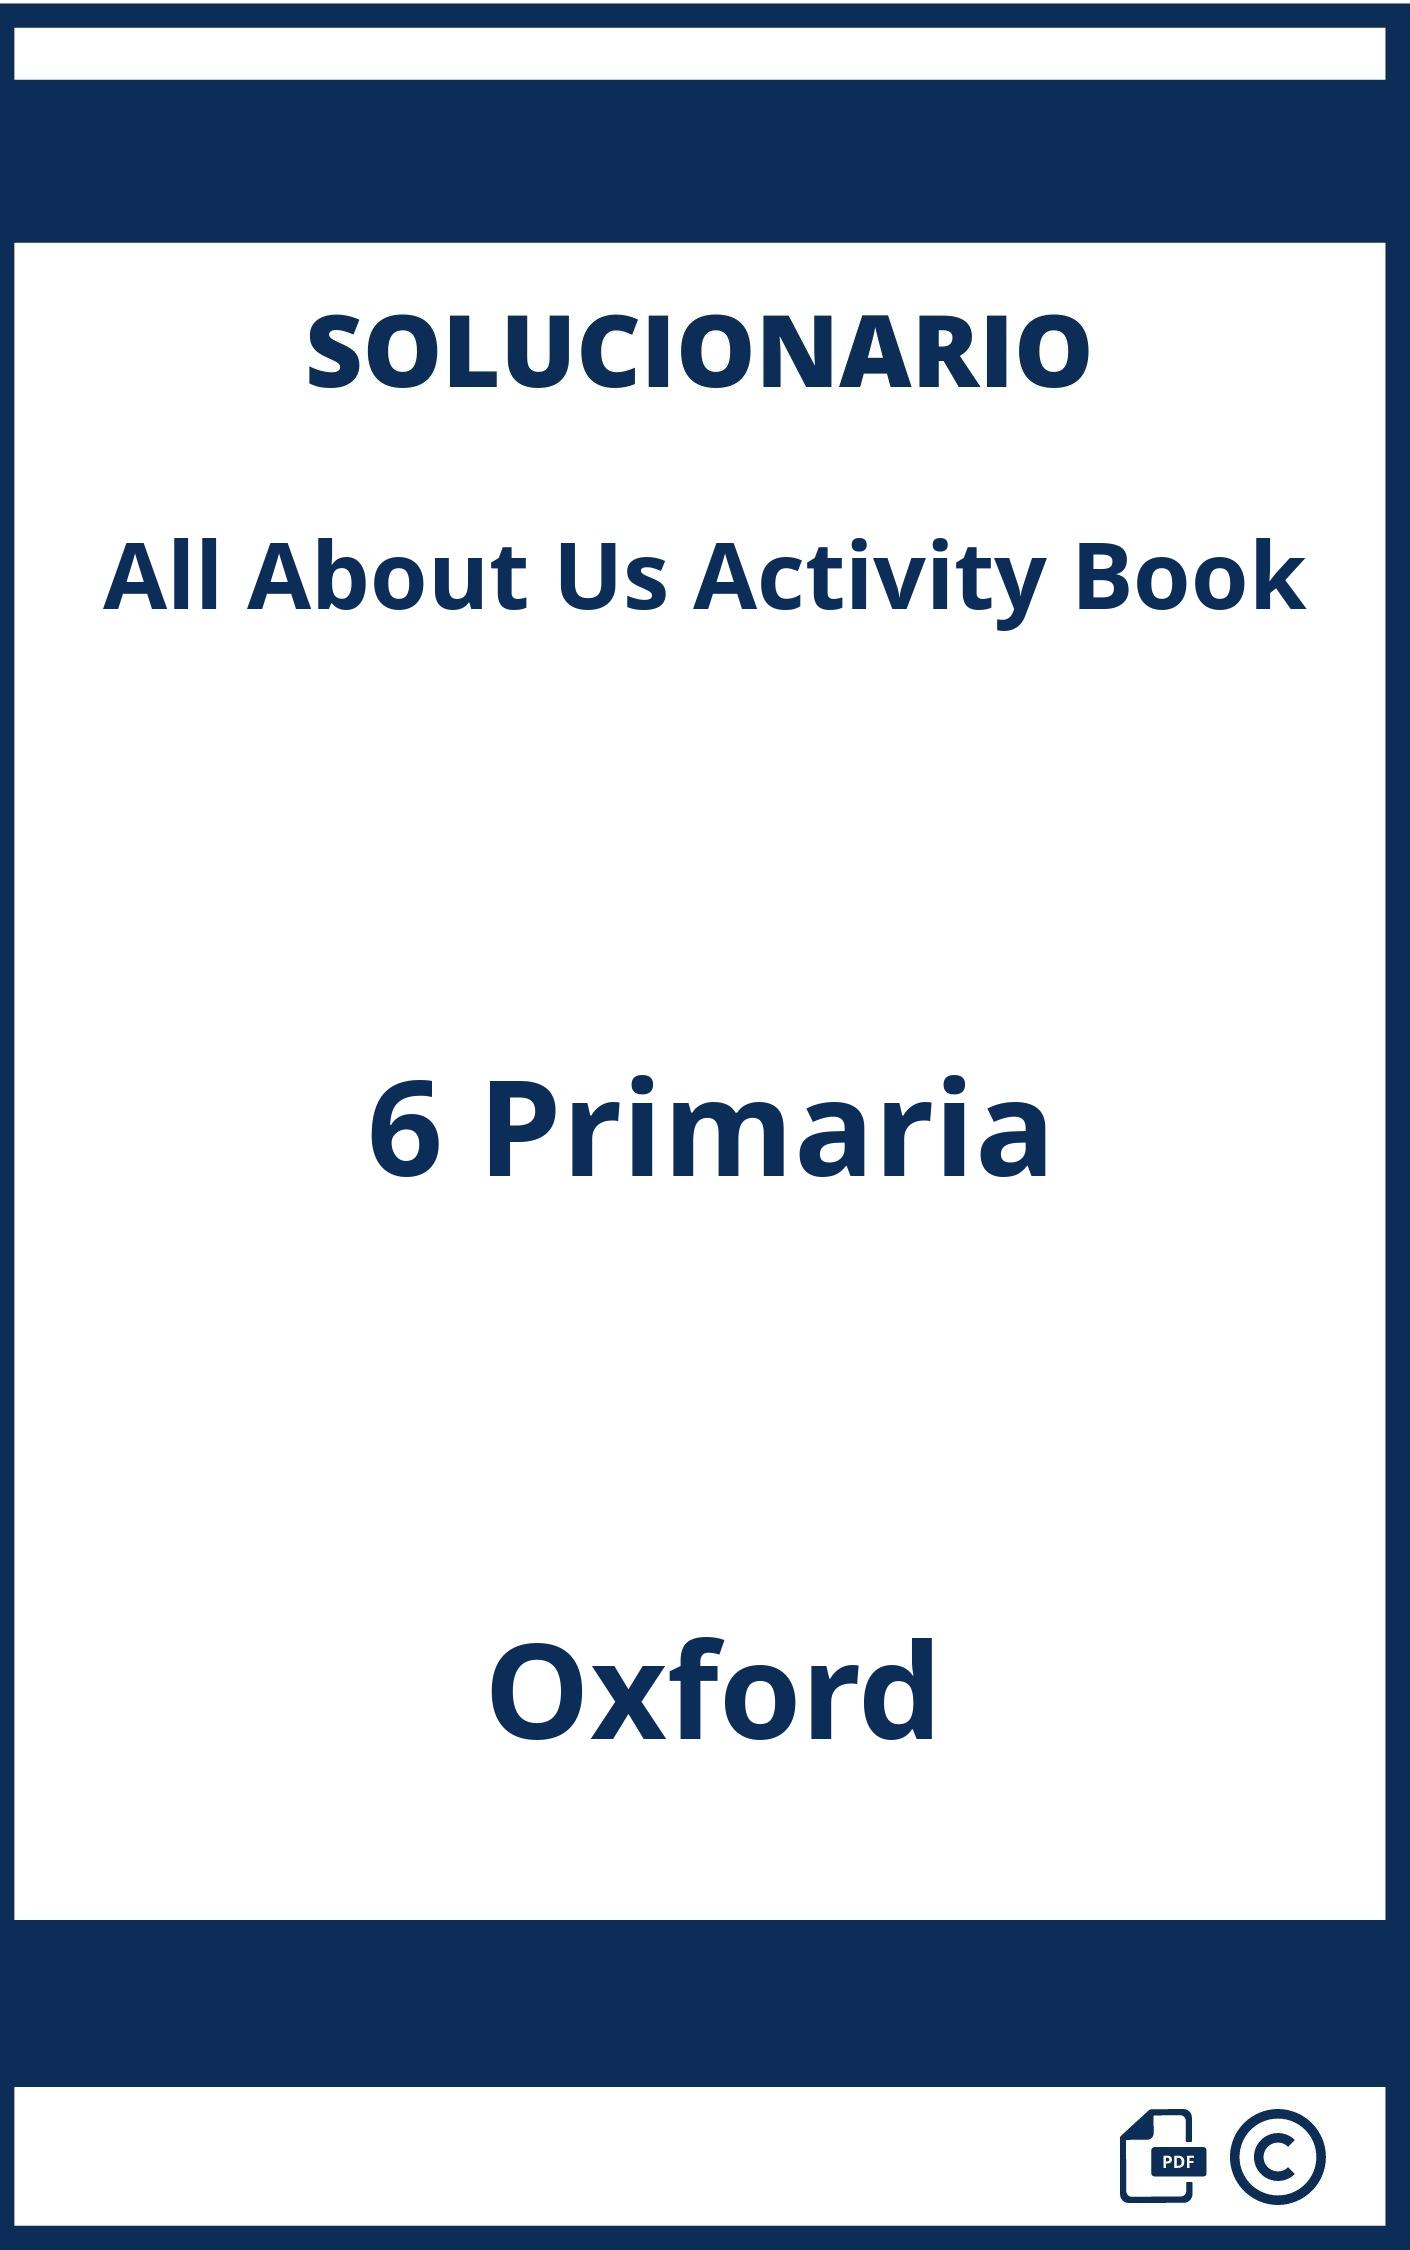 Solucionario All About Us Activity Book 6 Primaria Oxford